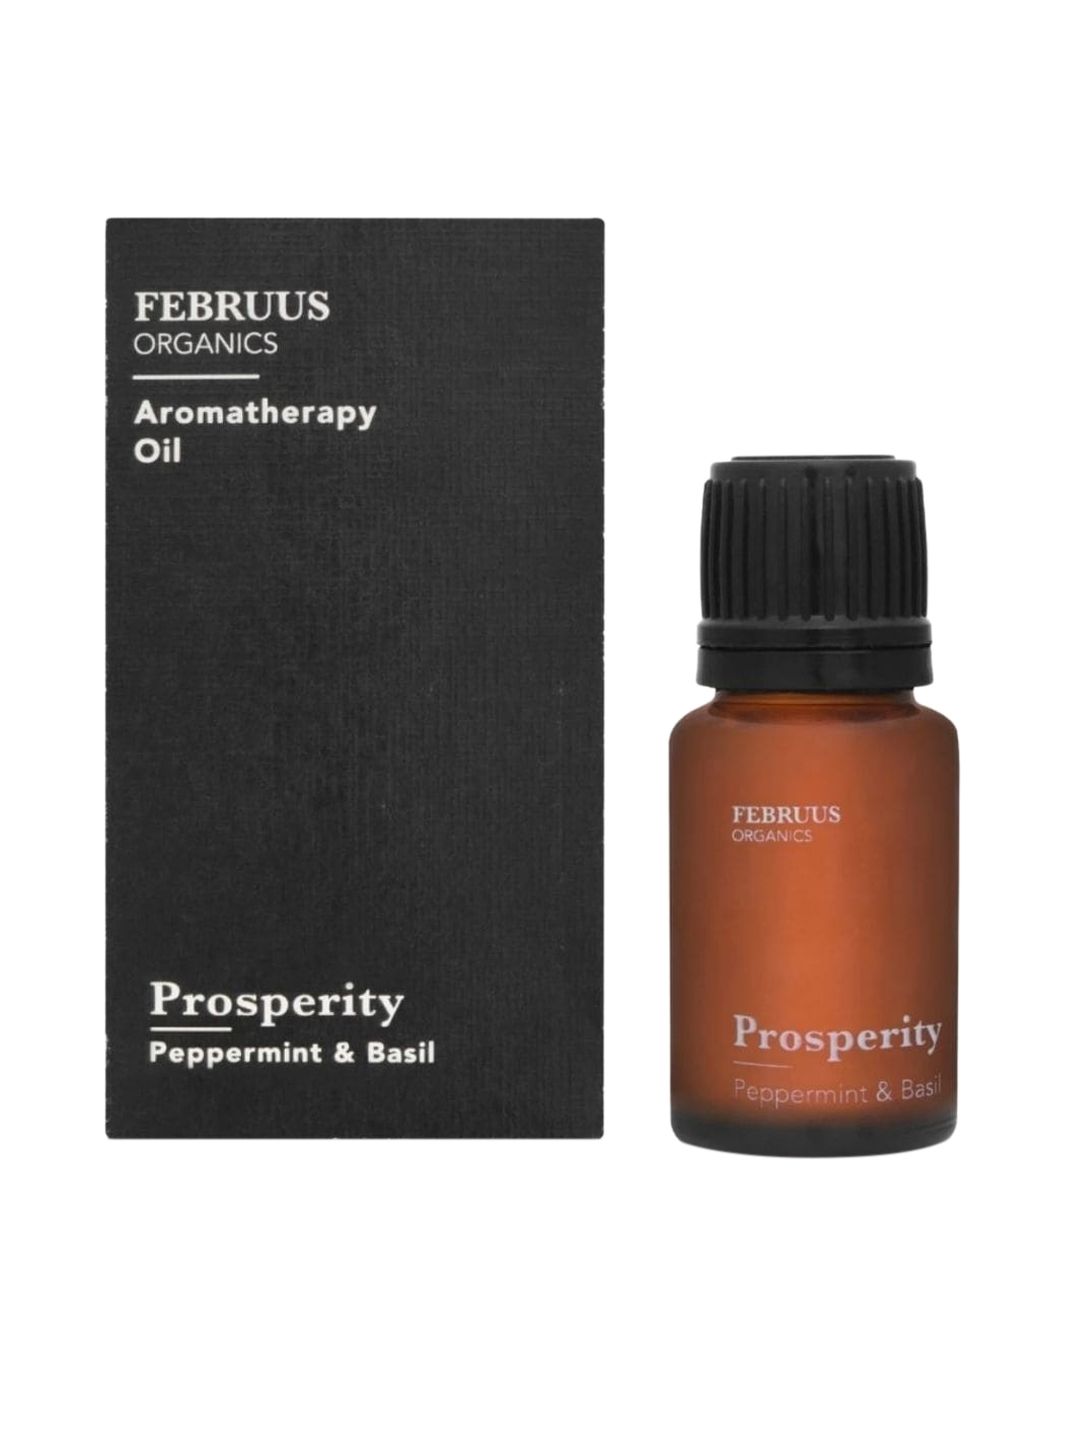 Februus Organics Aromatherapy Oil - Prosperity Price in India